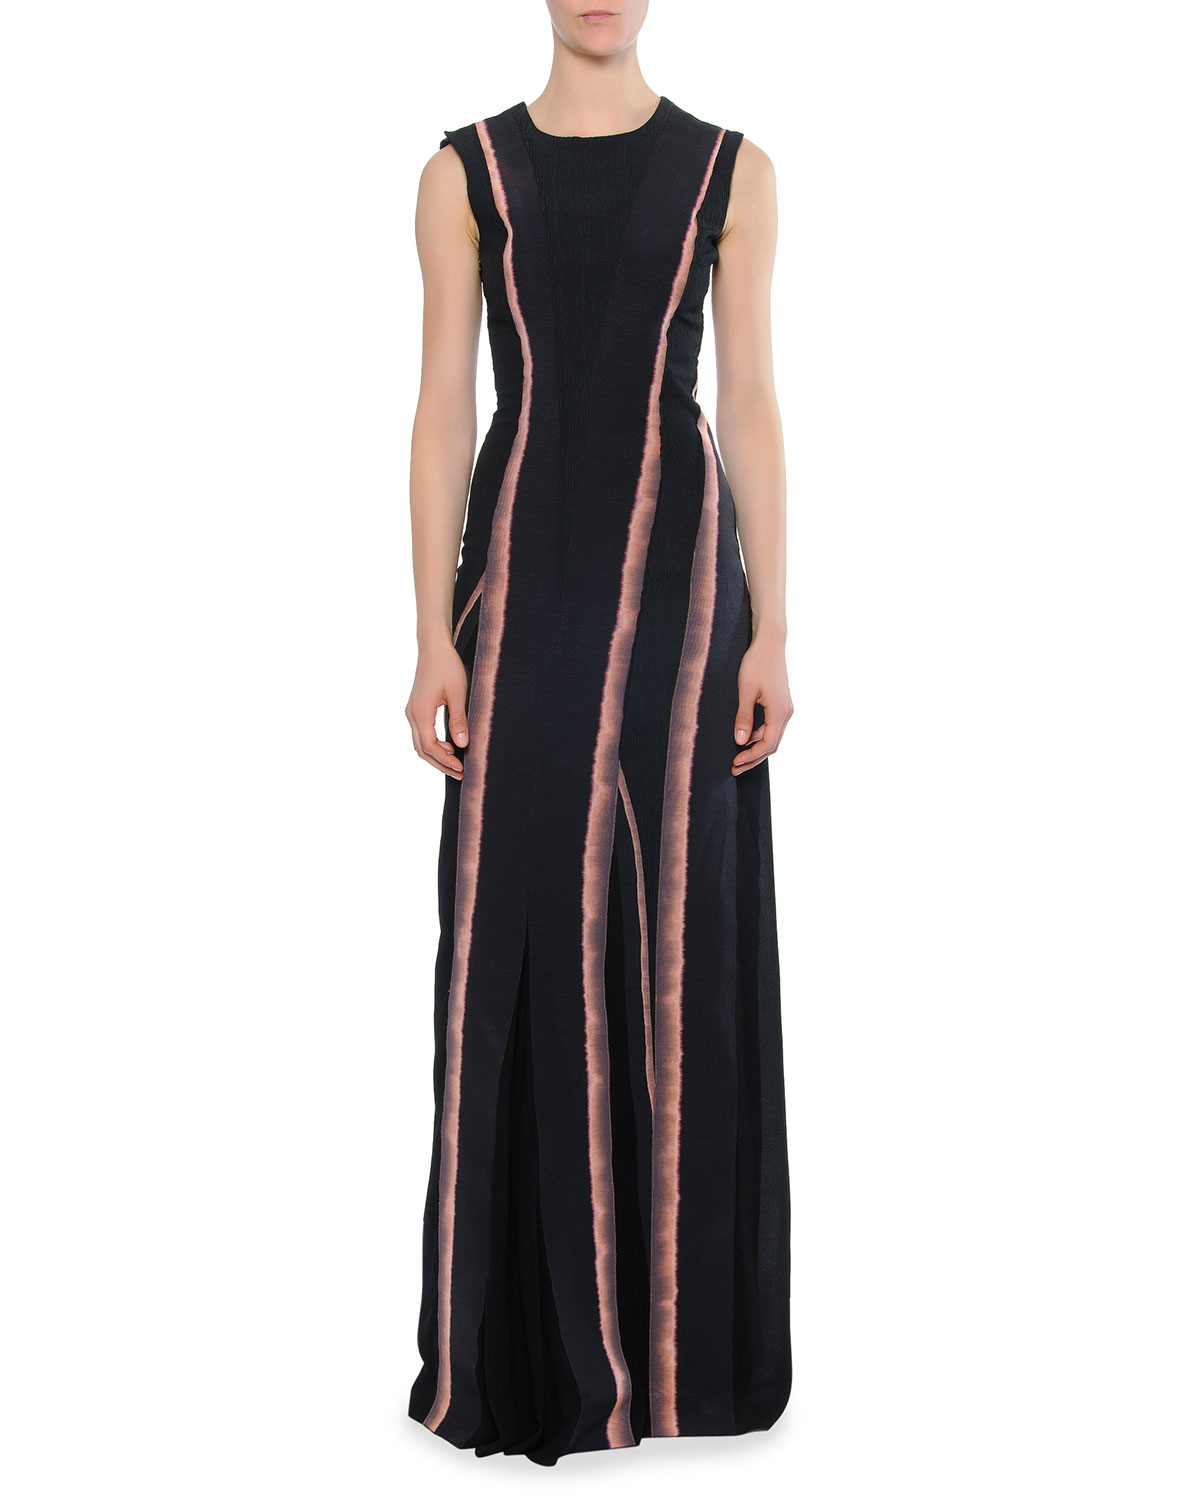 Bottega Veneta Jewel-Neck Bleached Vertical-Striped Dress in Black